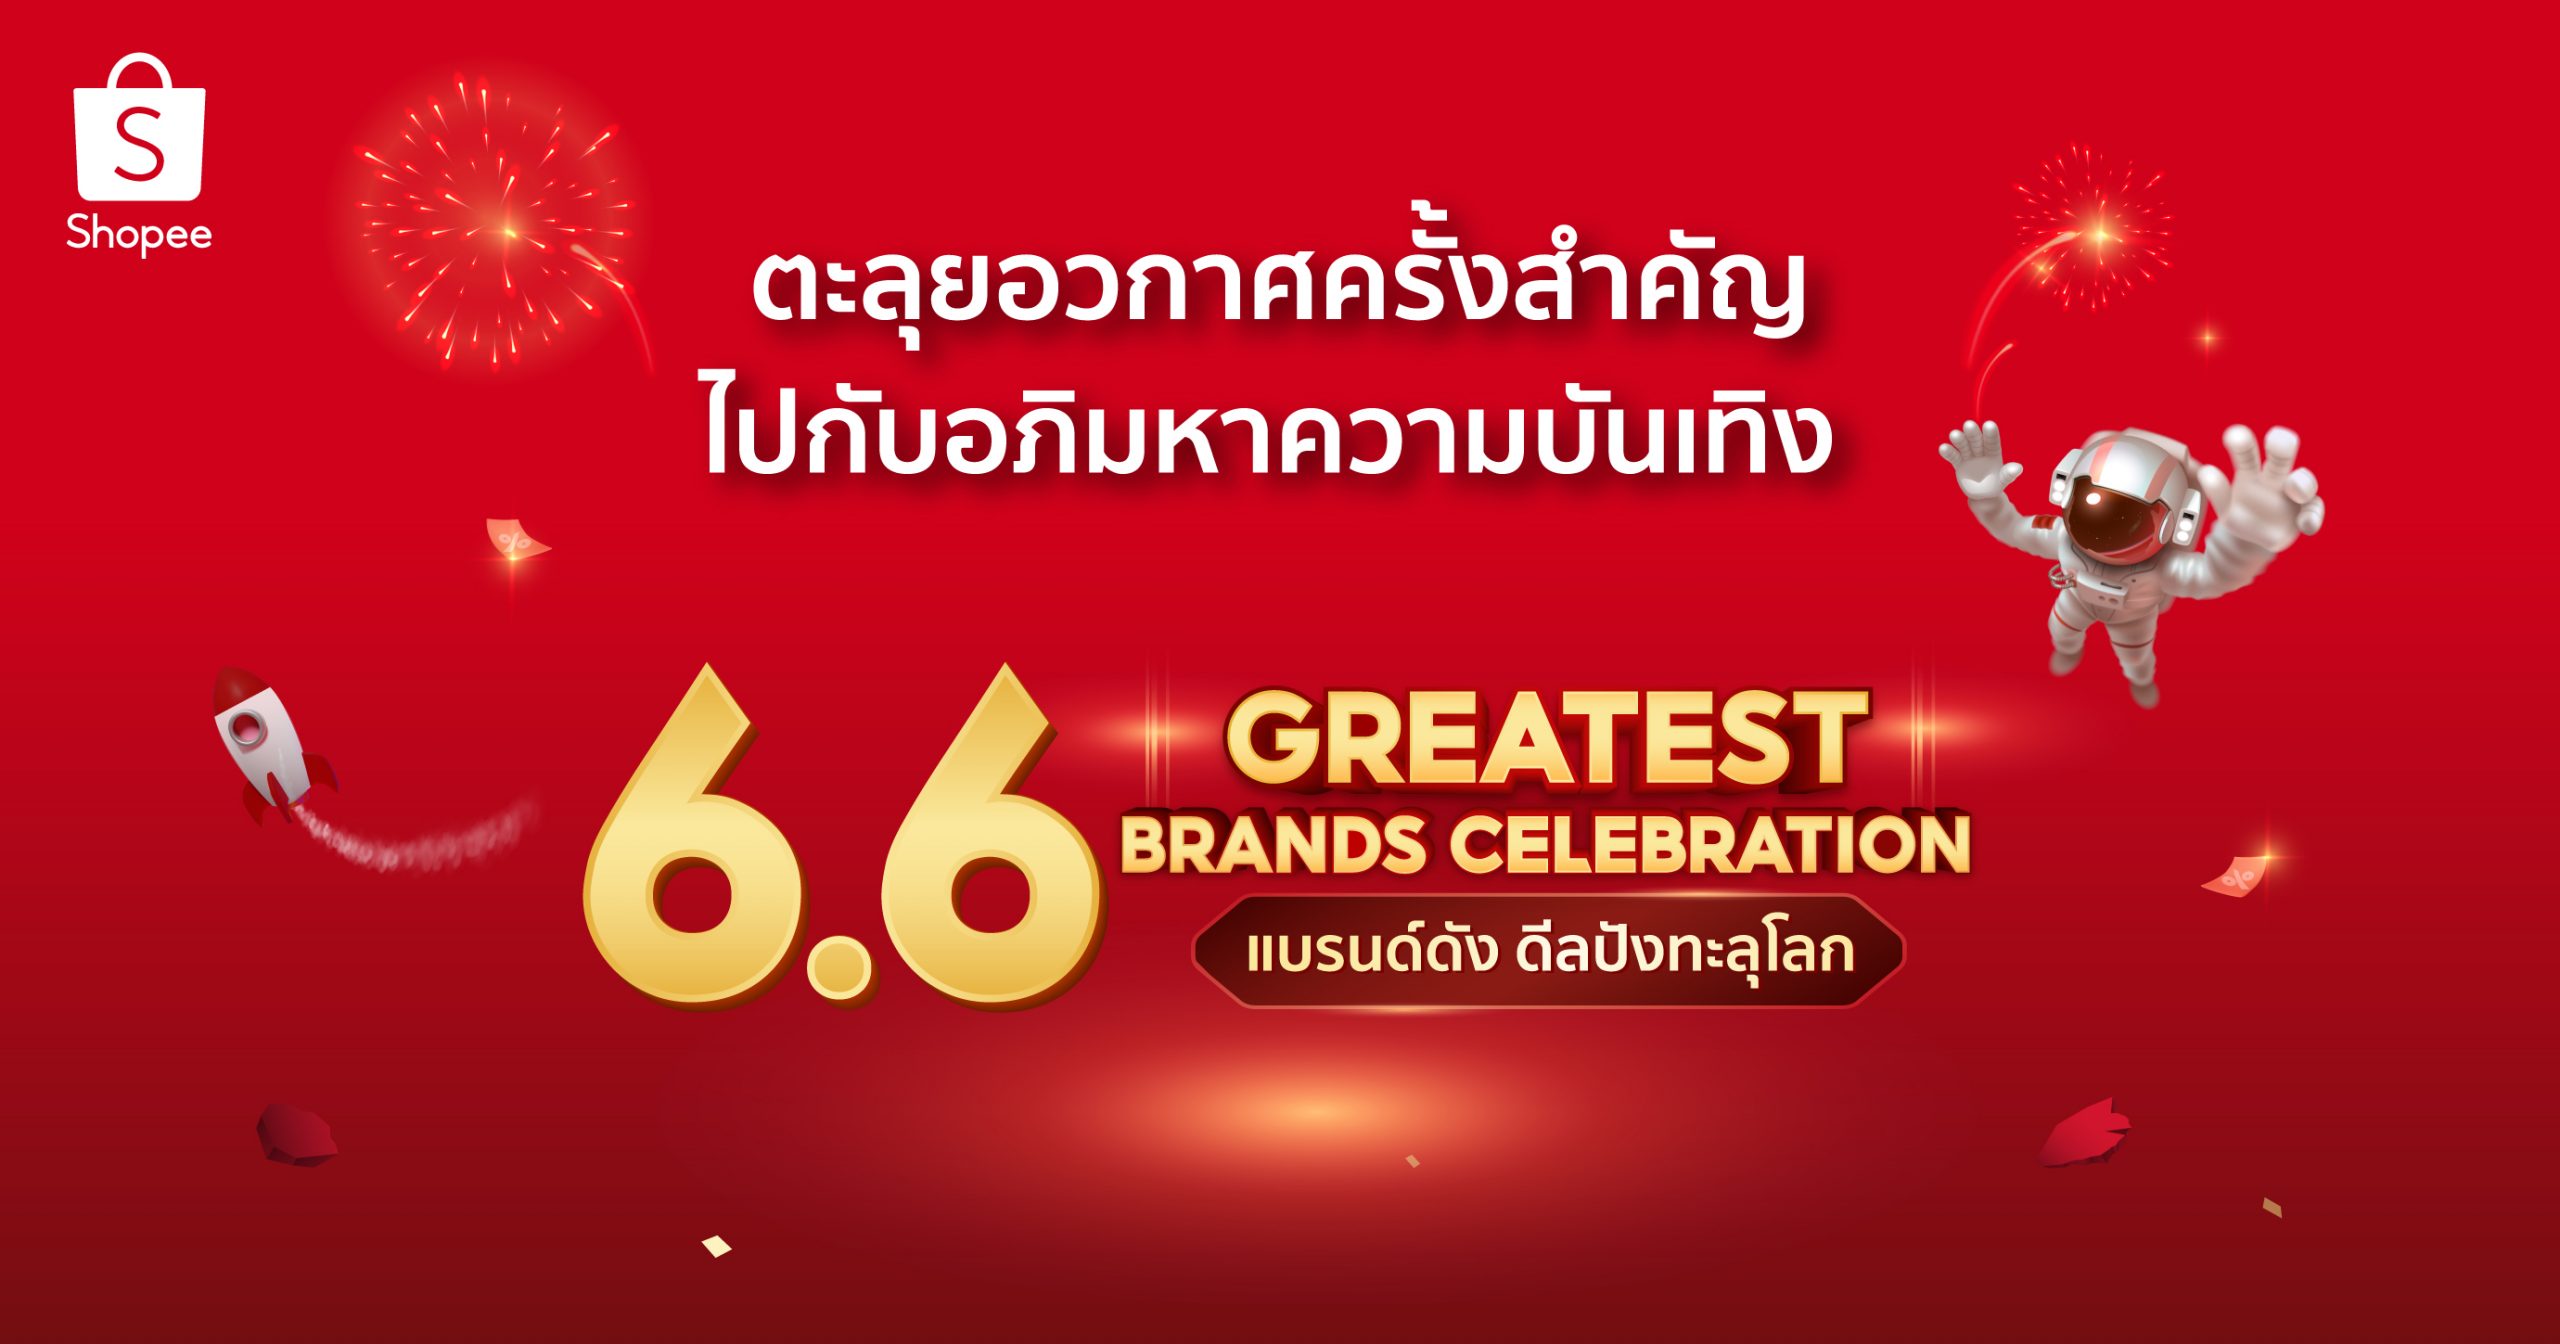 Shopee Shopee 6.6 Greatest Brands Celebration